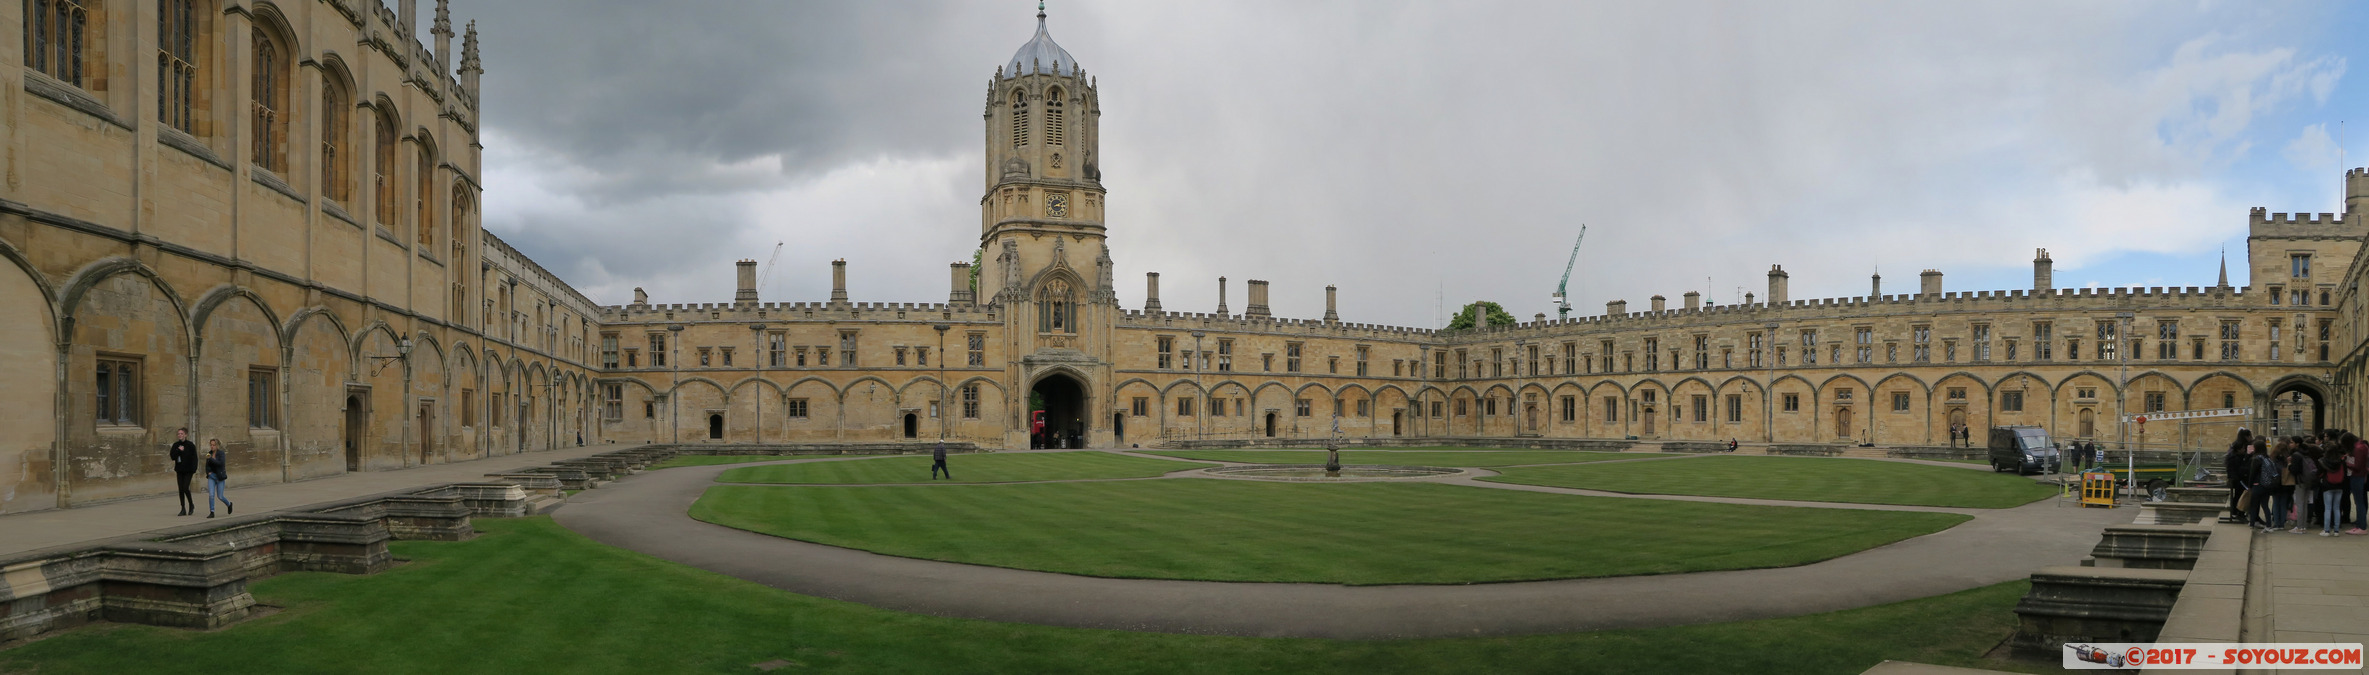 Oxford - Christ Church College - panorama
Mots-clés: England GBR geo:lat=51.74995032 geo:lon=-1.25523685 geotagged Holywell Ward Oxford Royaume-Uni Christ Church College universit panorama